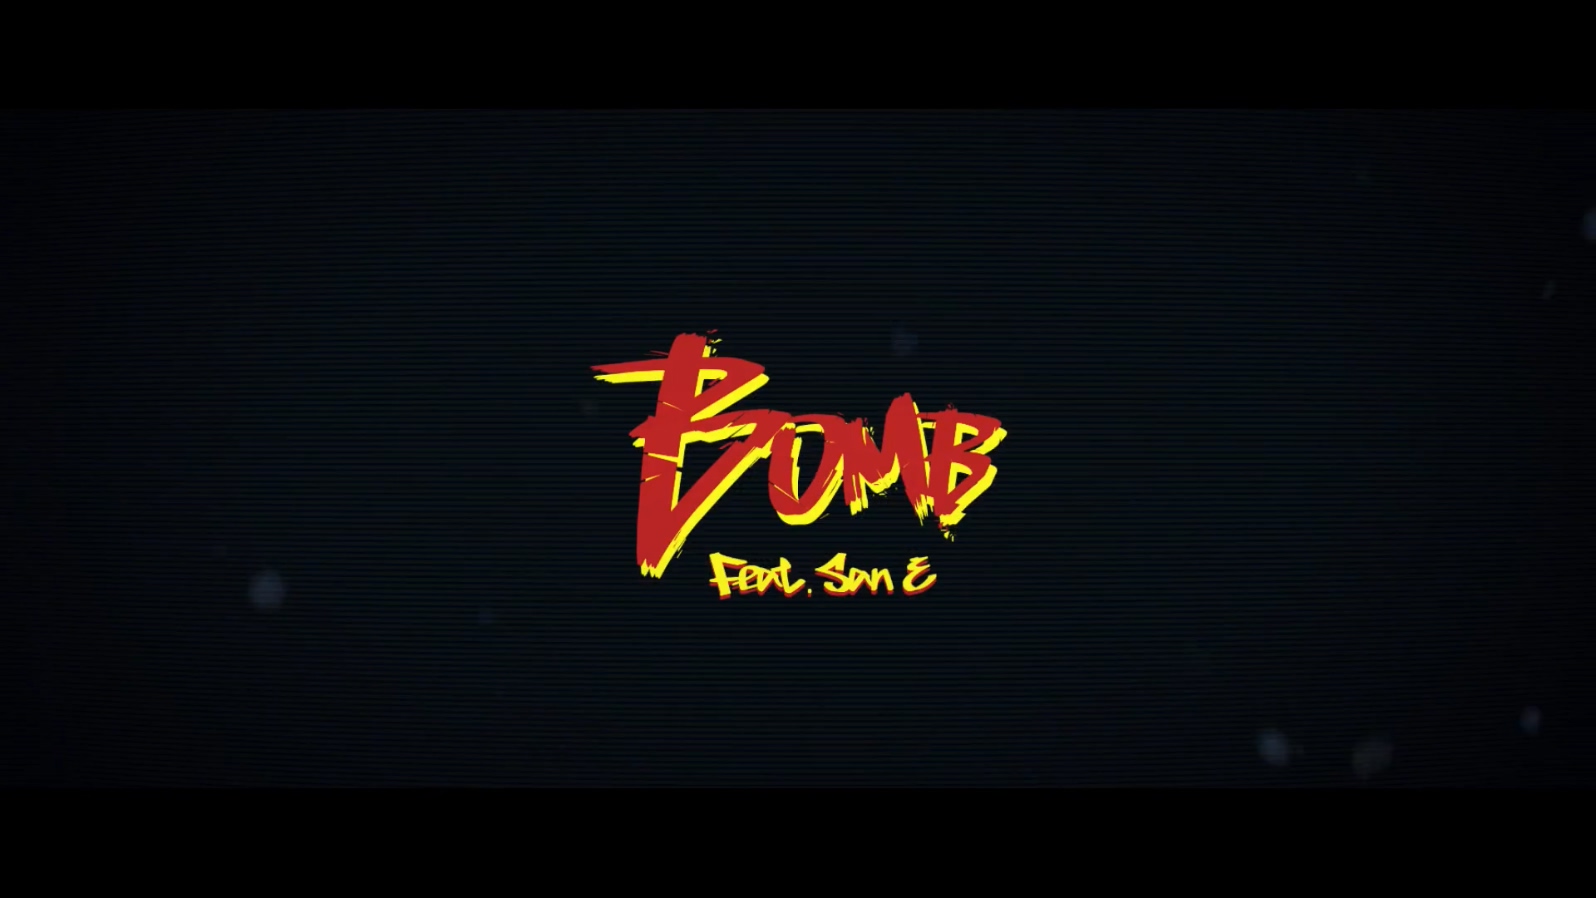 RAVI 《BOMB》(Feat. San E) 1080